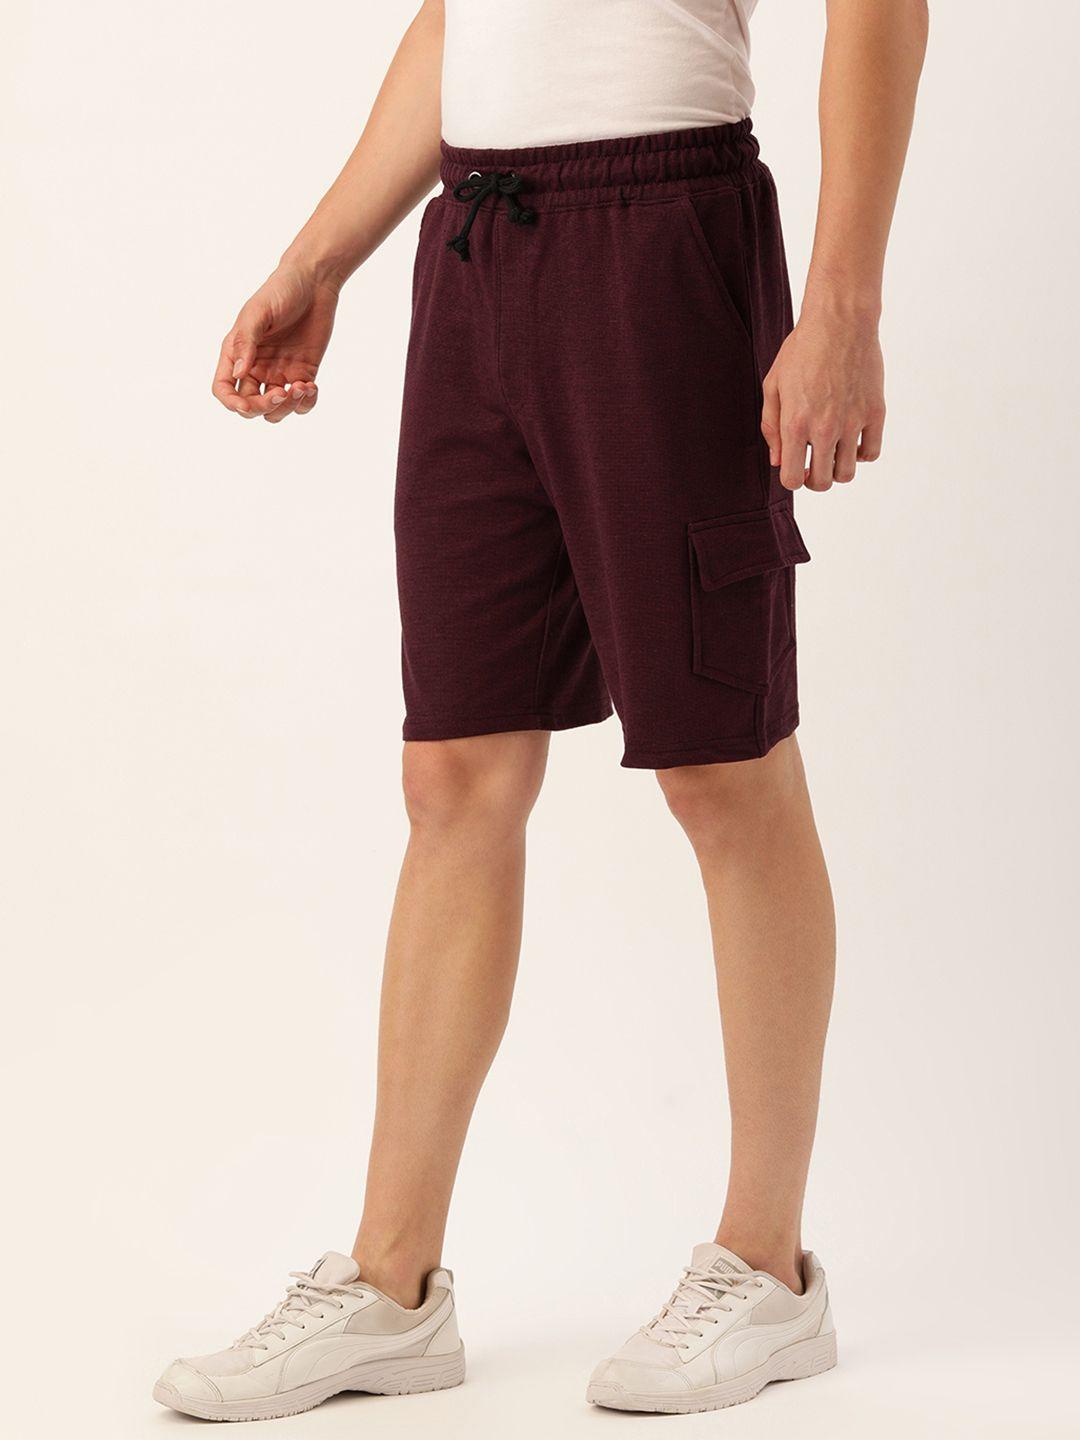 arise-men-maroon-solid-shorts